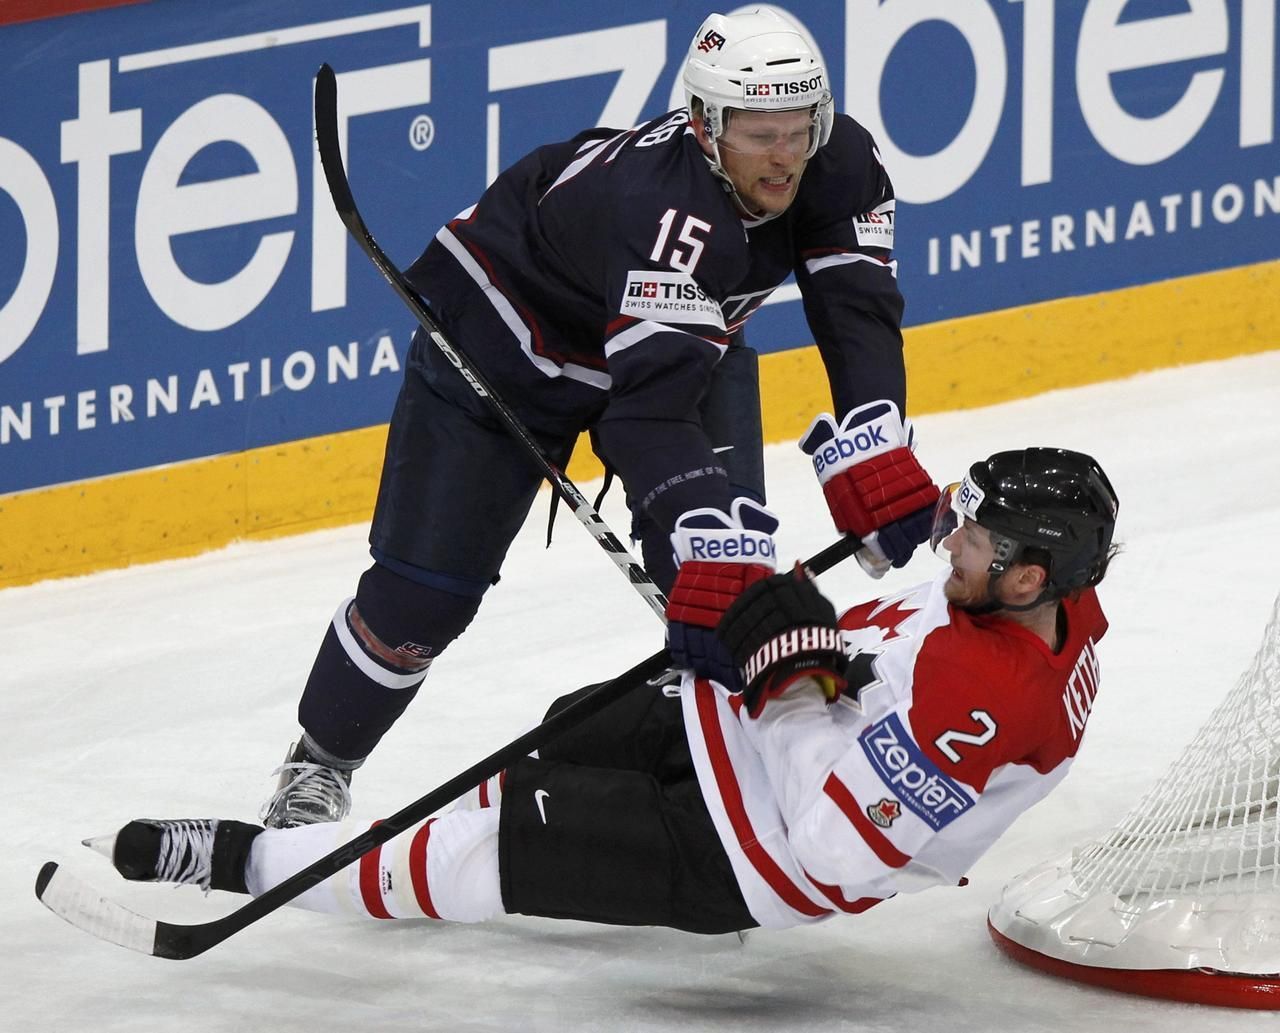 MS v hokeji 2012: USA - Kanada (Crabb, Keith)